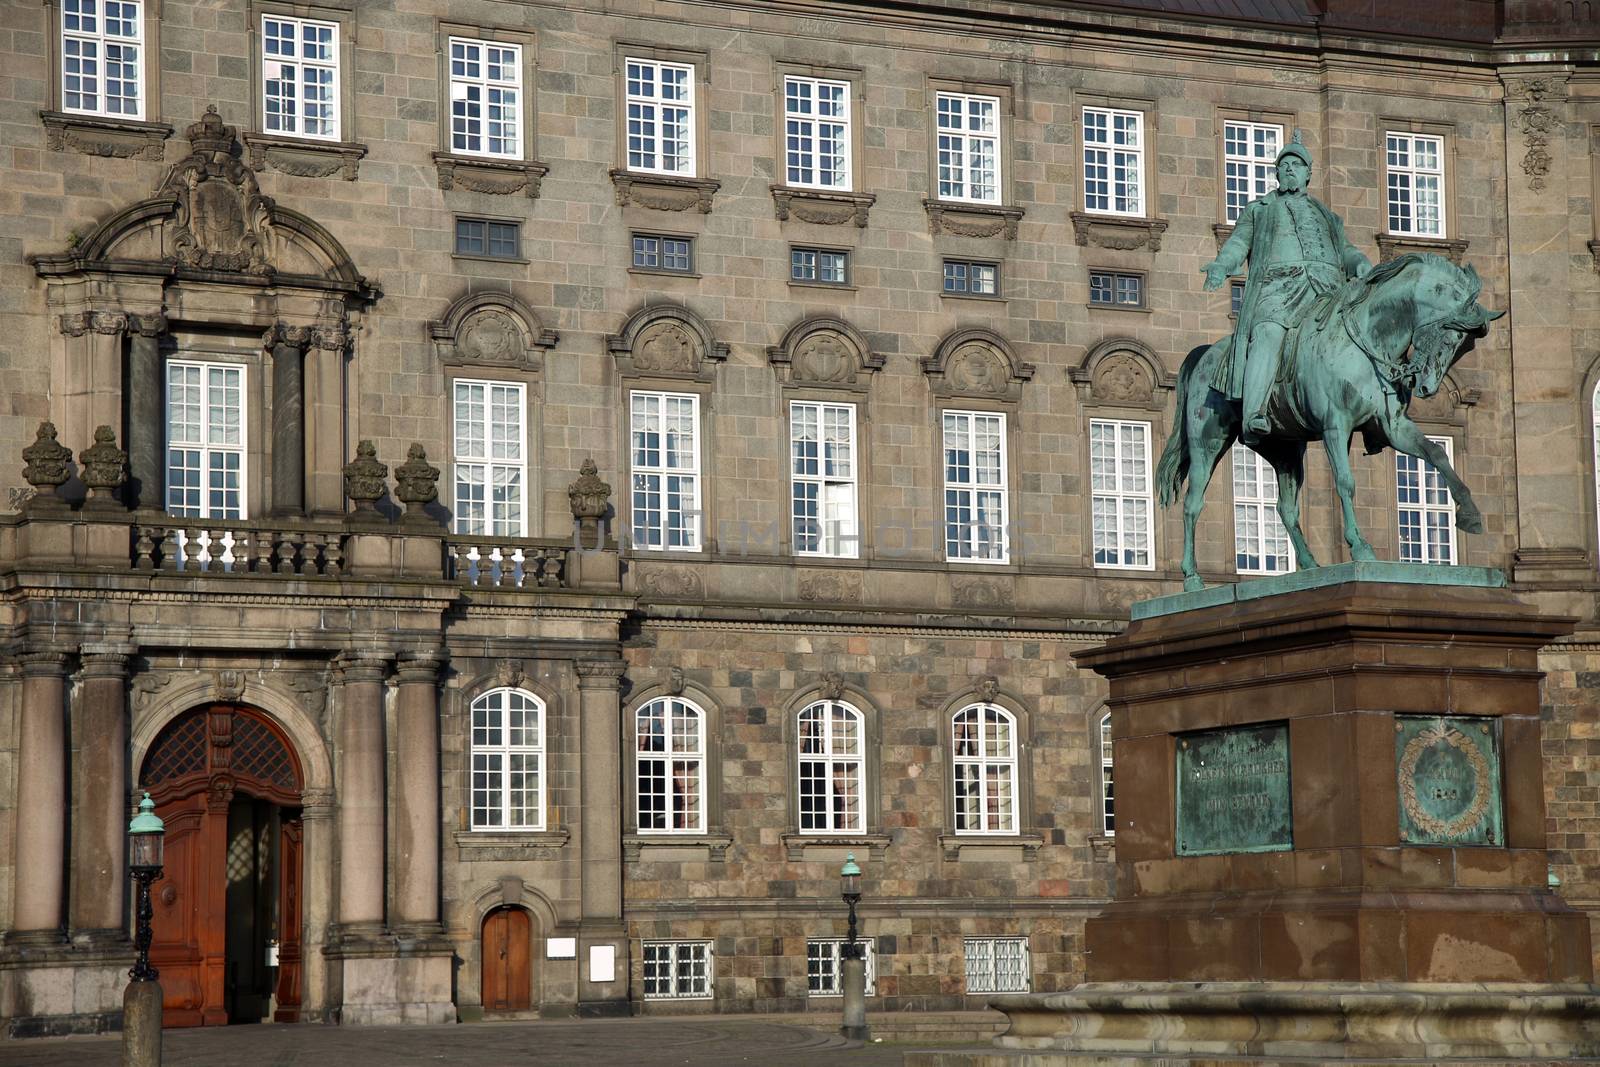 Christiansborg Palace in Copenhagen, Denmark by vladacanon